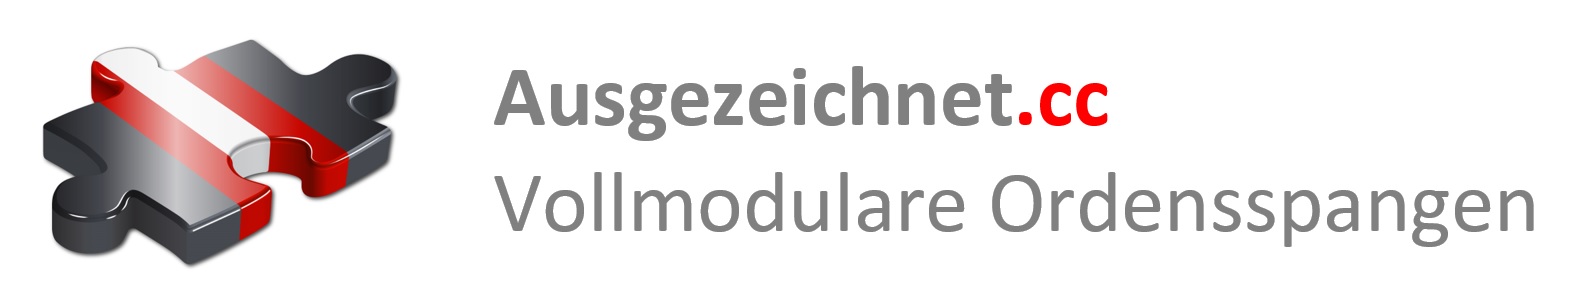 Hatzmann logo